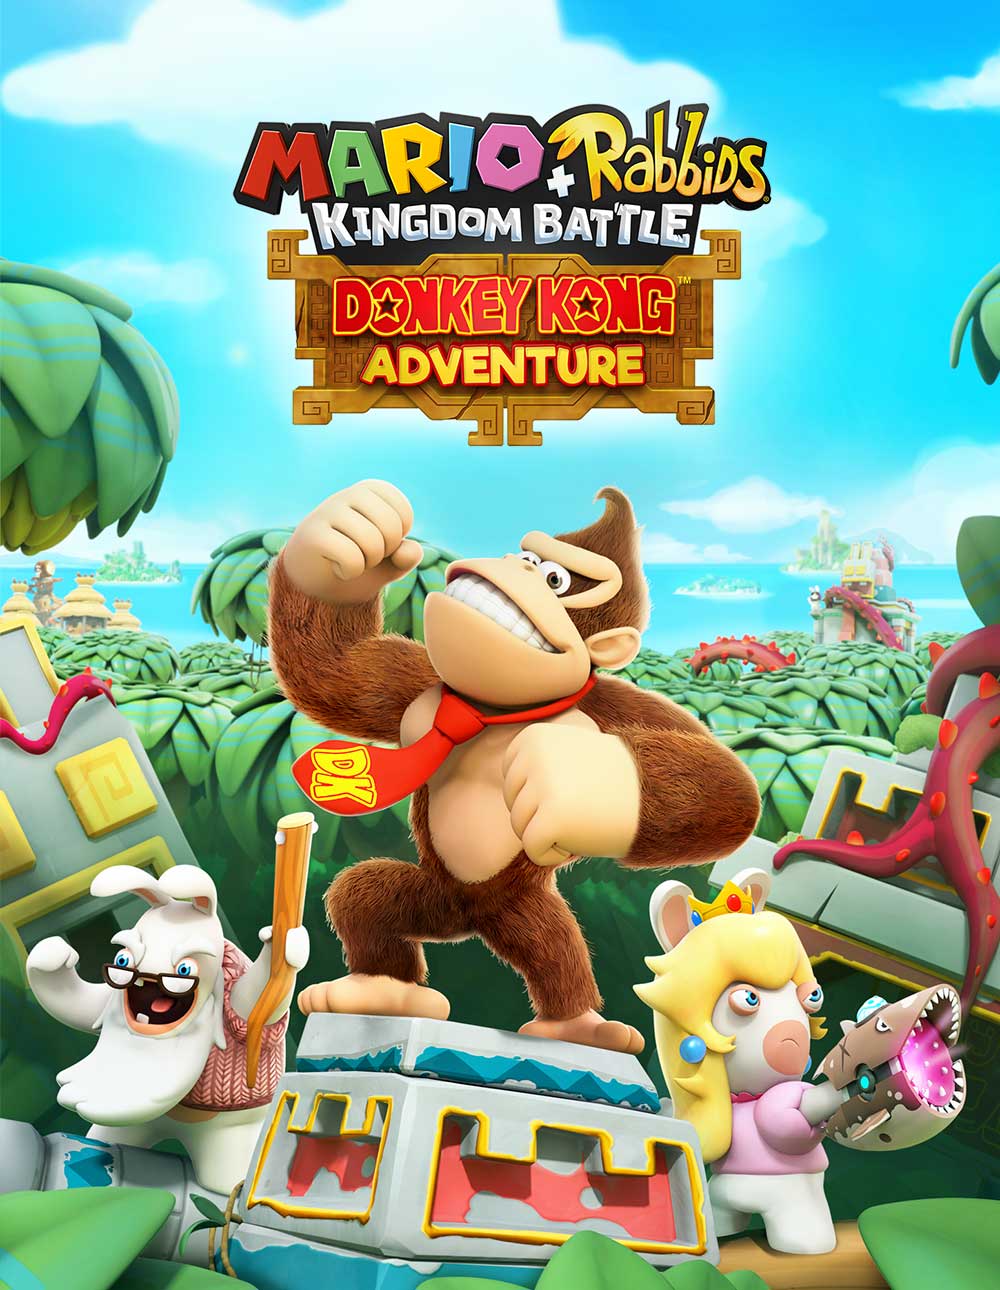 Mario + Rabbids Kingdom Battle: Donkey Kong Adventure. Raving